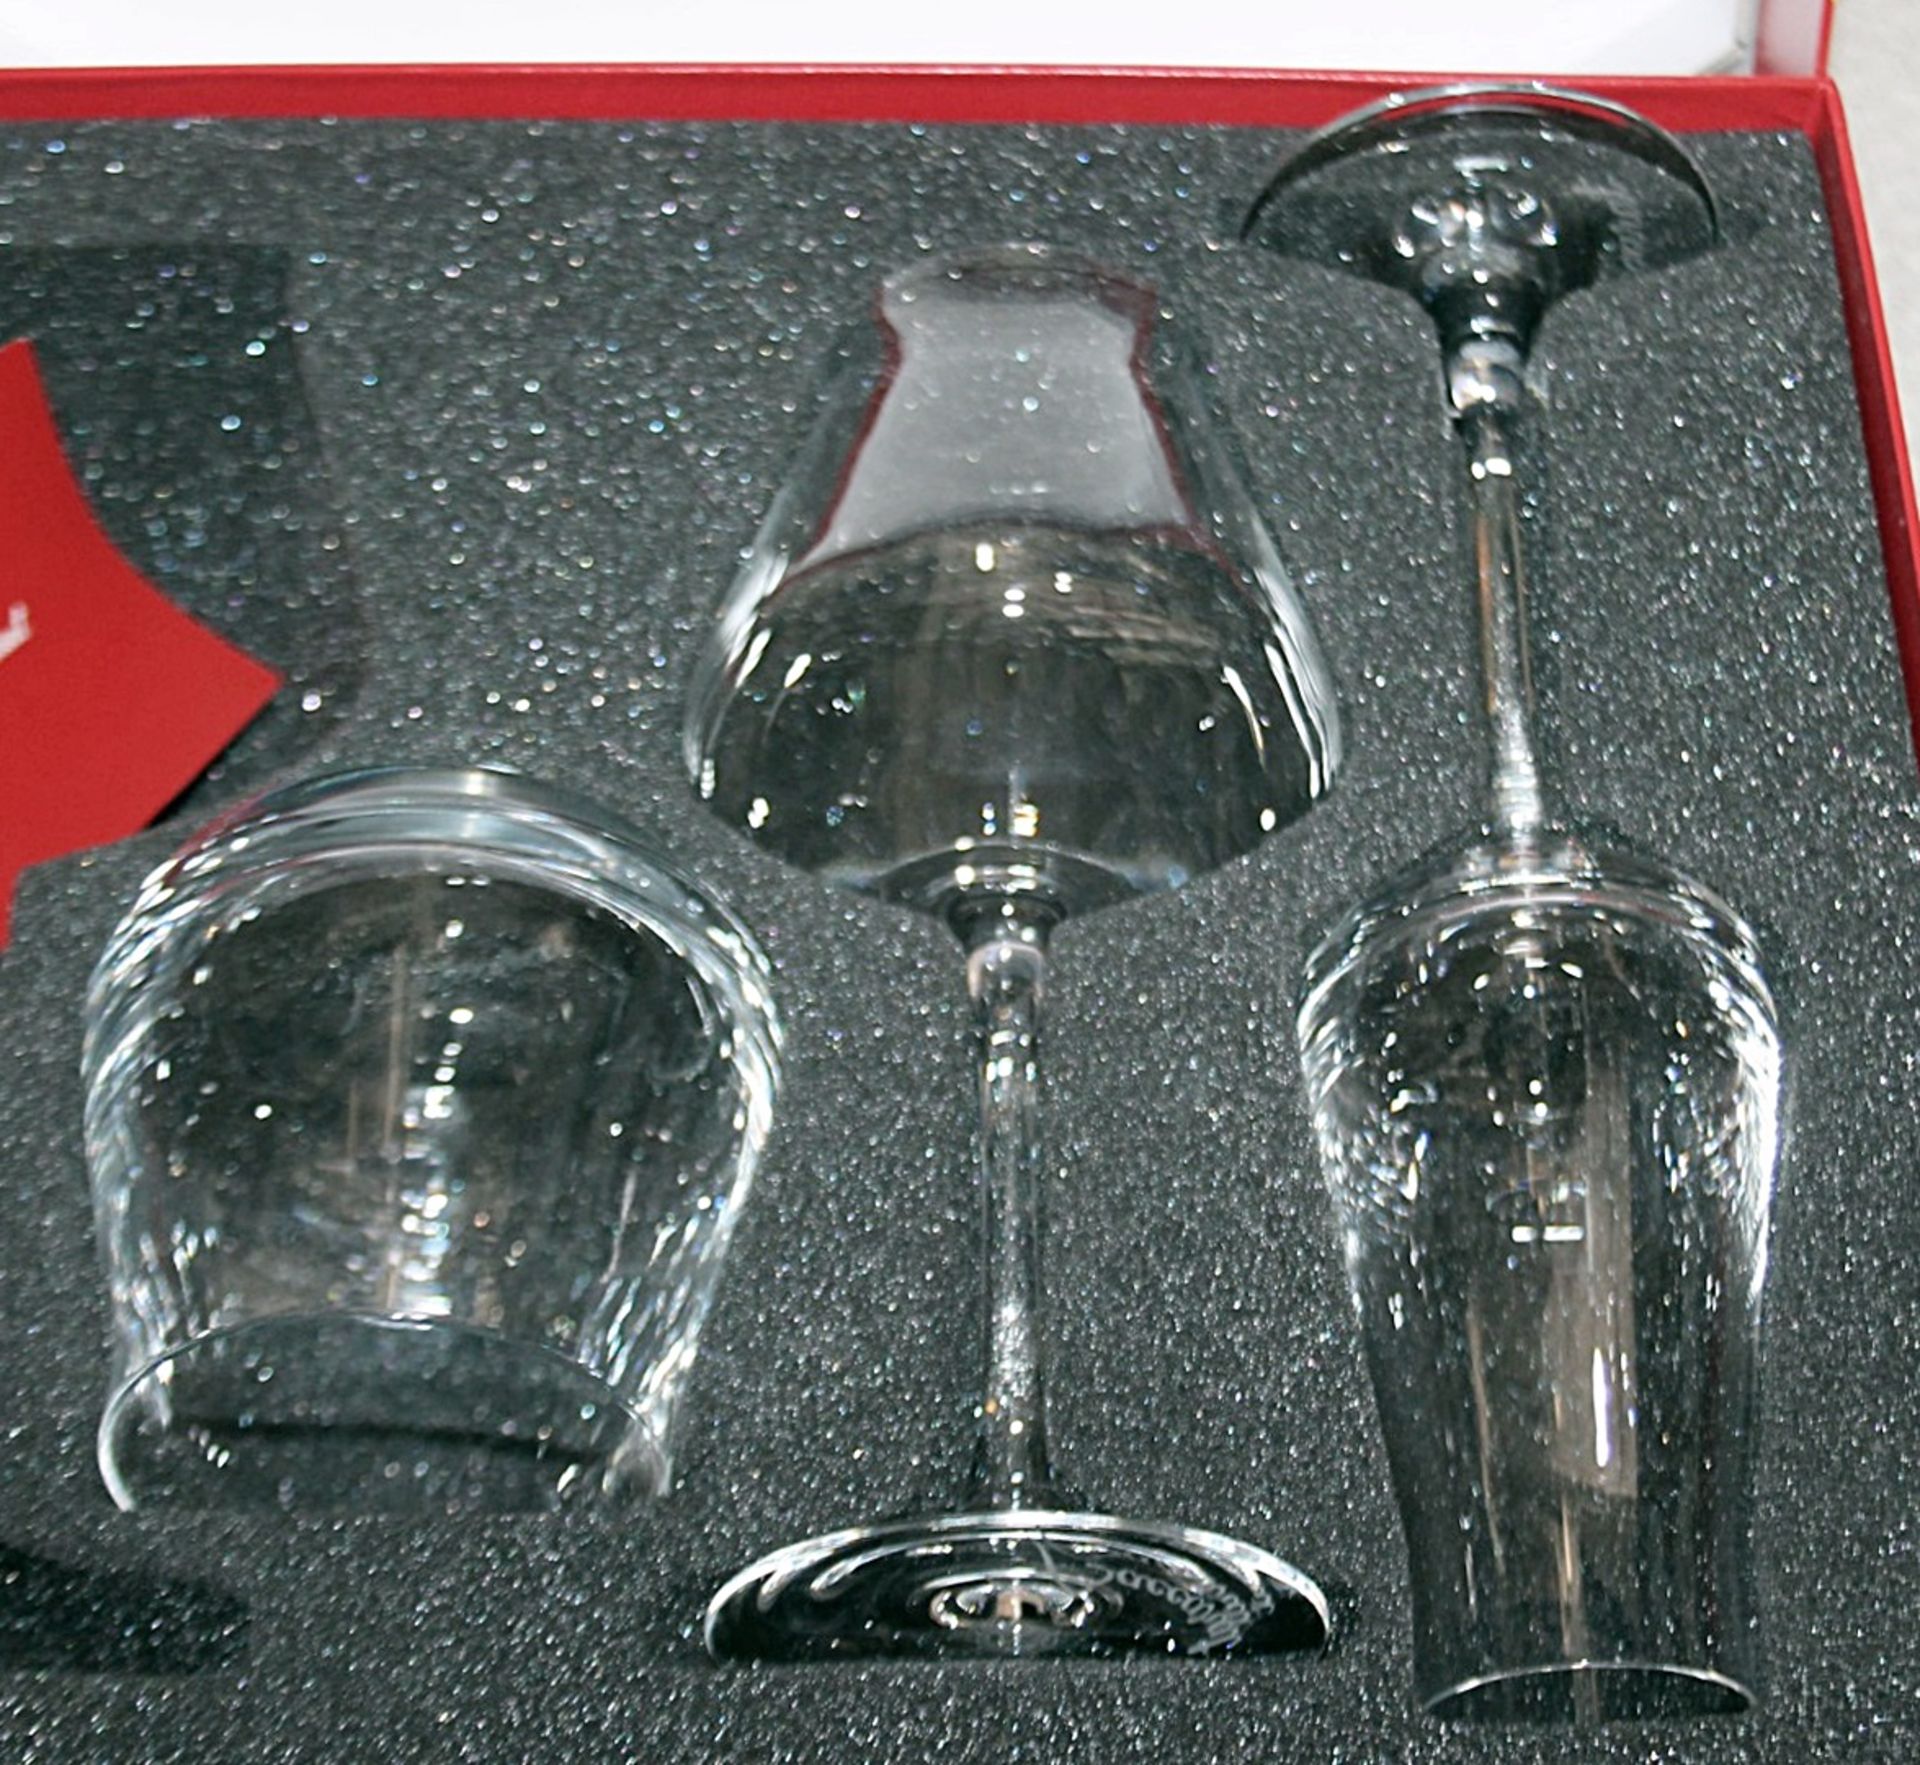 3 x Assorted BACCARAT 'Chateau Baccarat' Degustation Crystal Glasses - Original Total Value £180. - Image 2 of 7